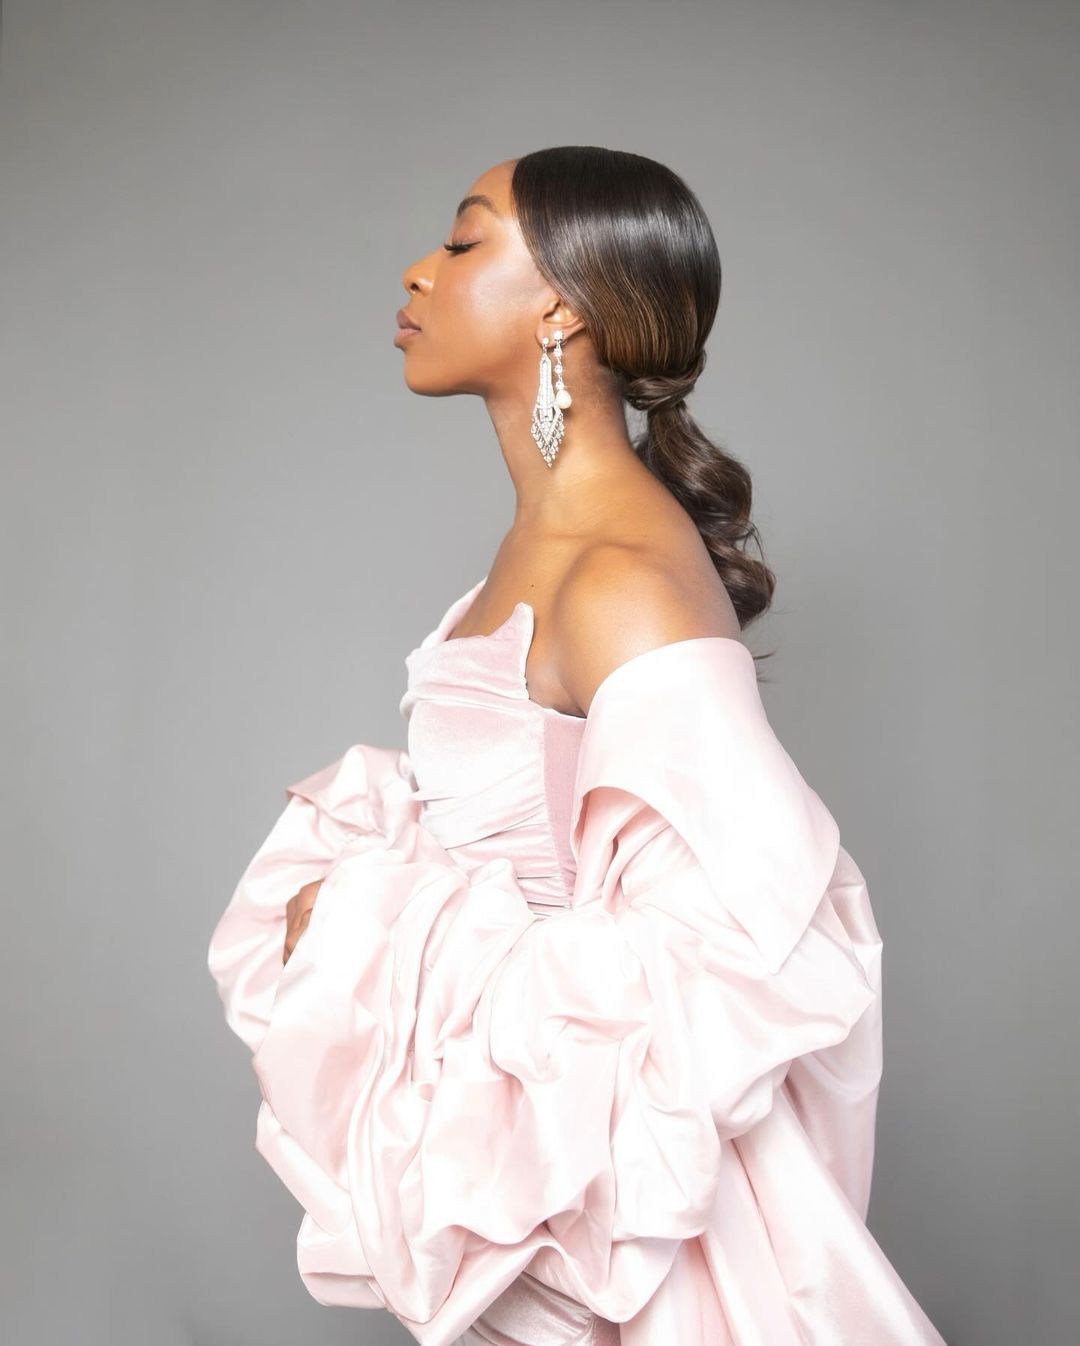 Ego Nwodim in crystal earrings and pink dress